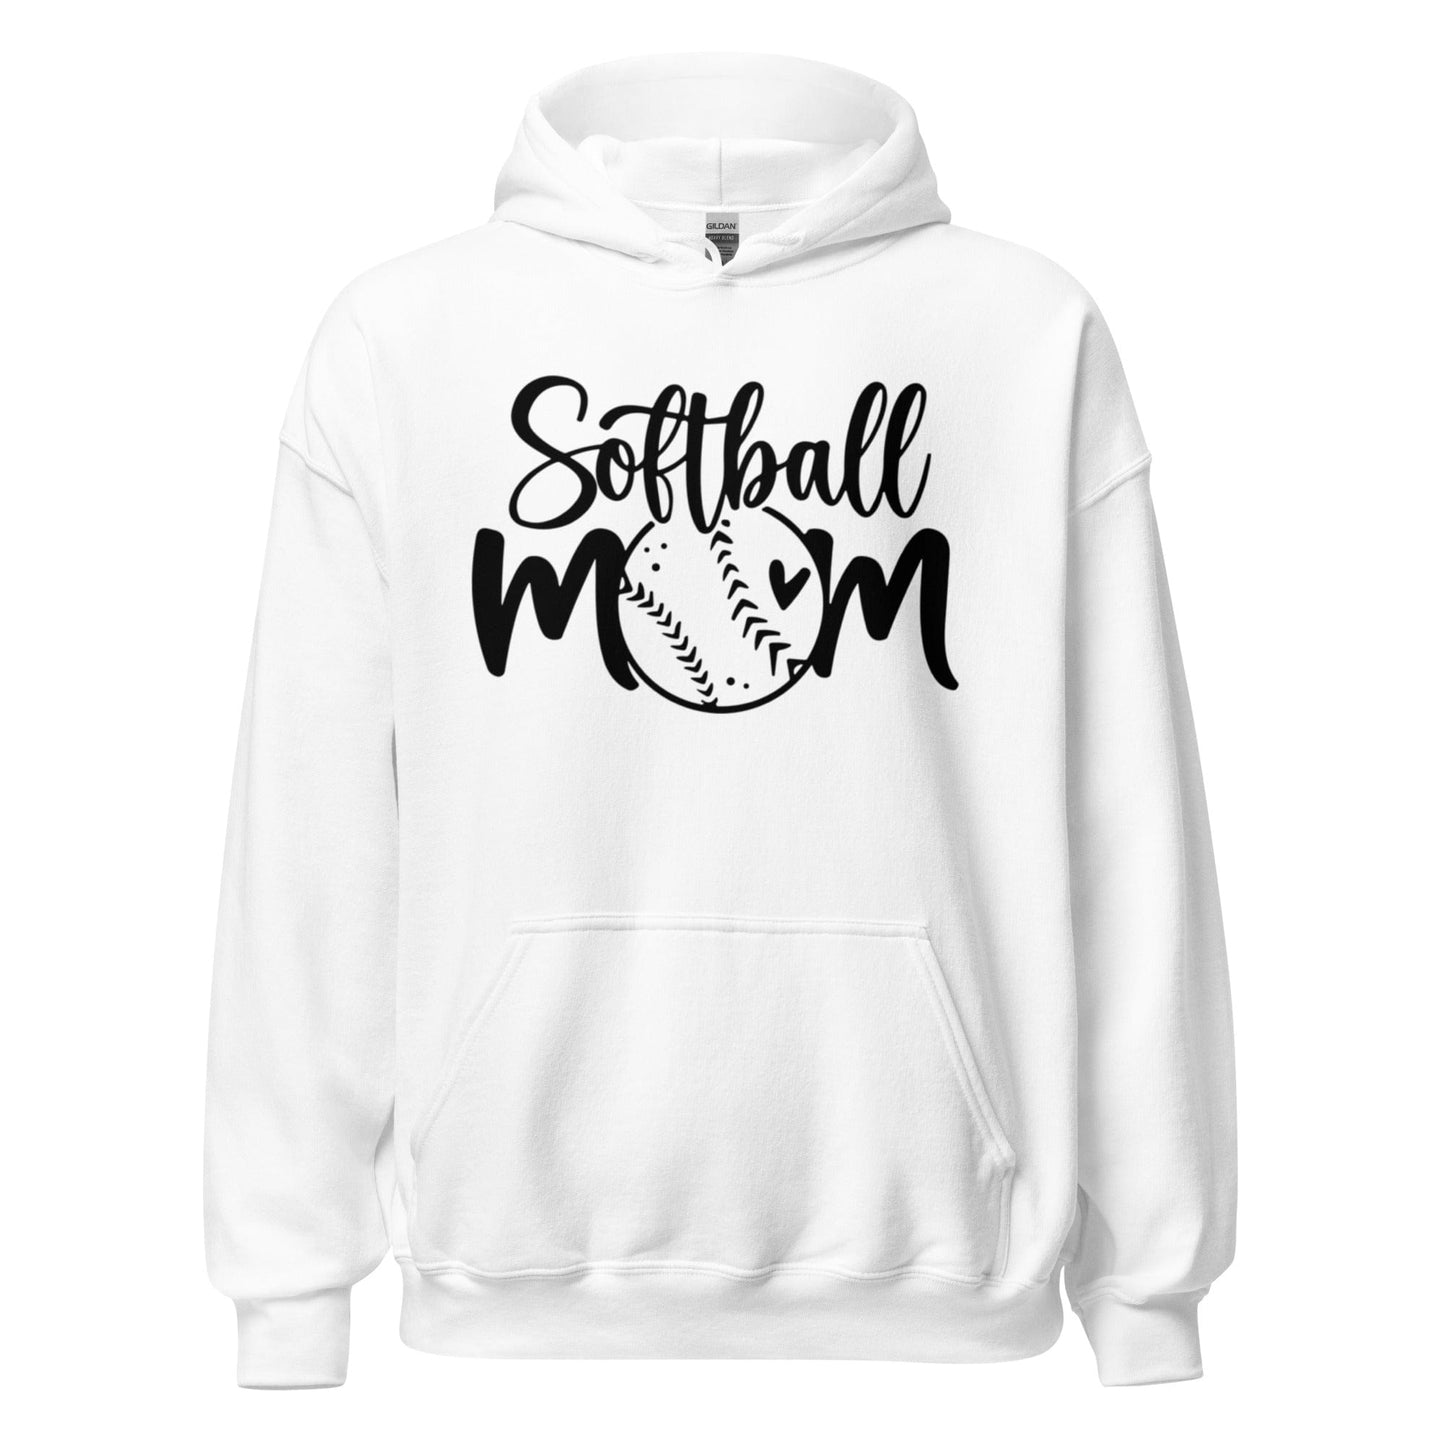 Softball Mom - Adult Hoodie